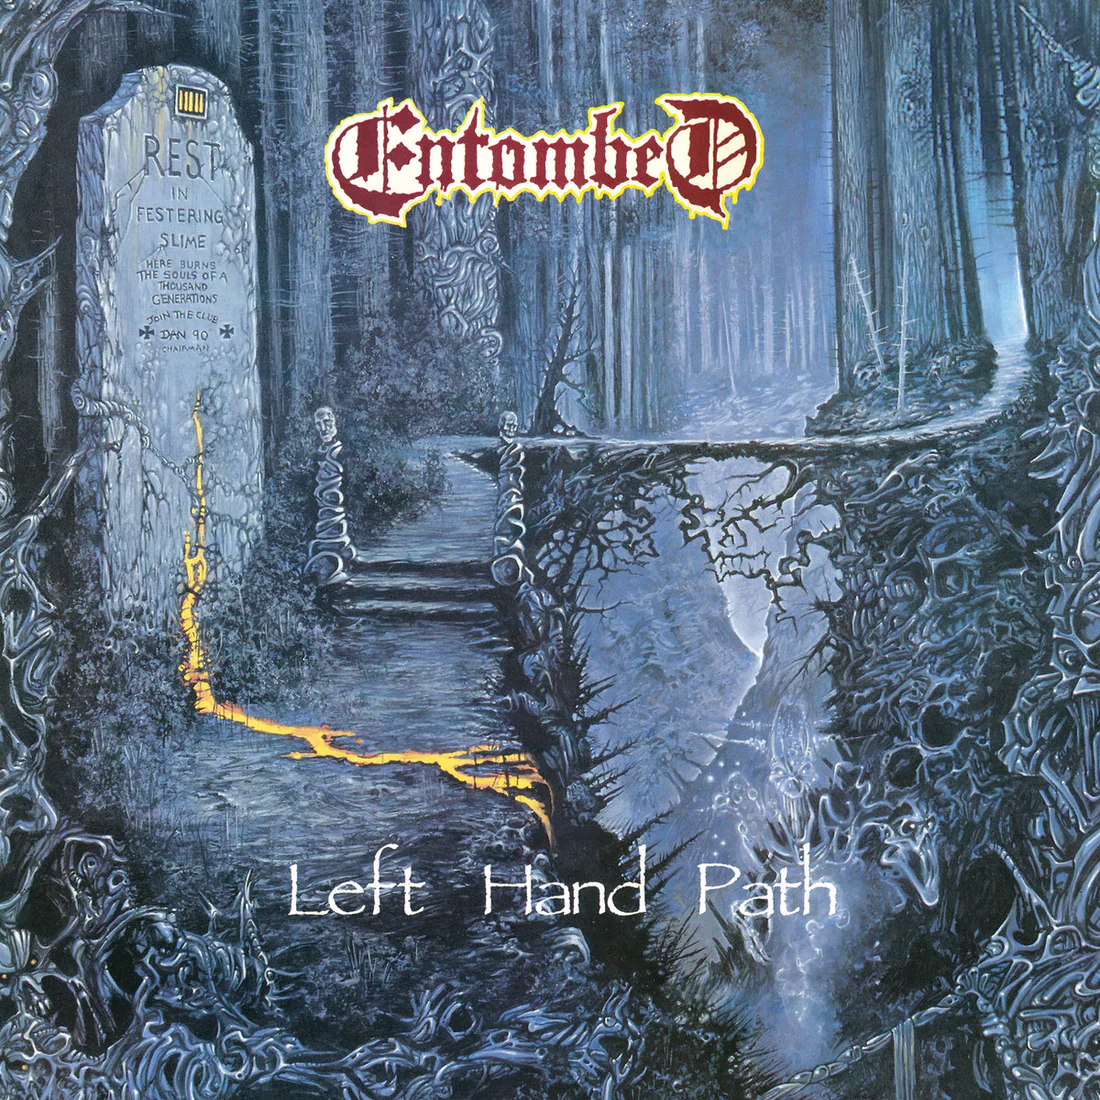 Entombed - Left Hand Path LP